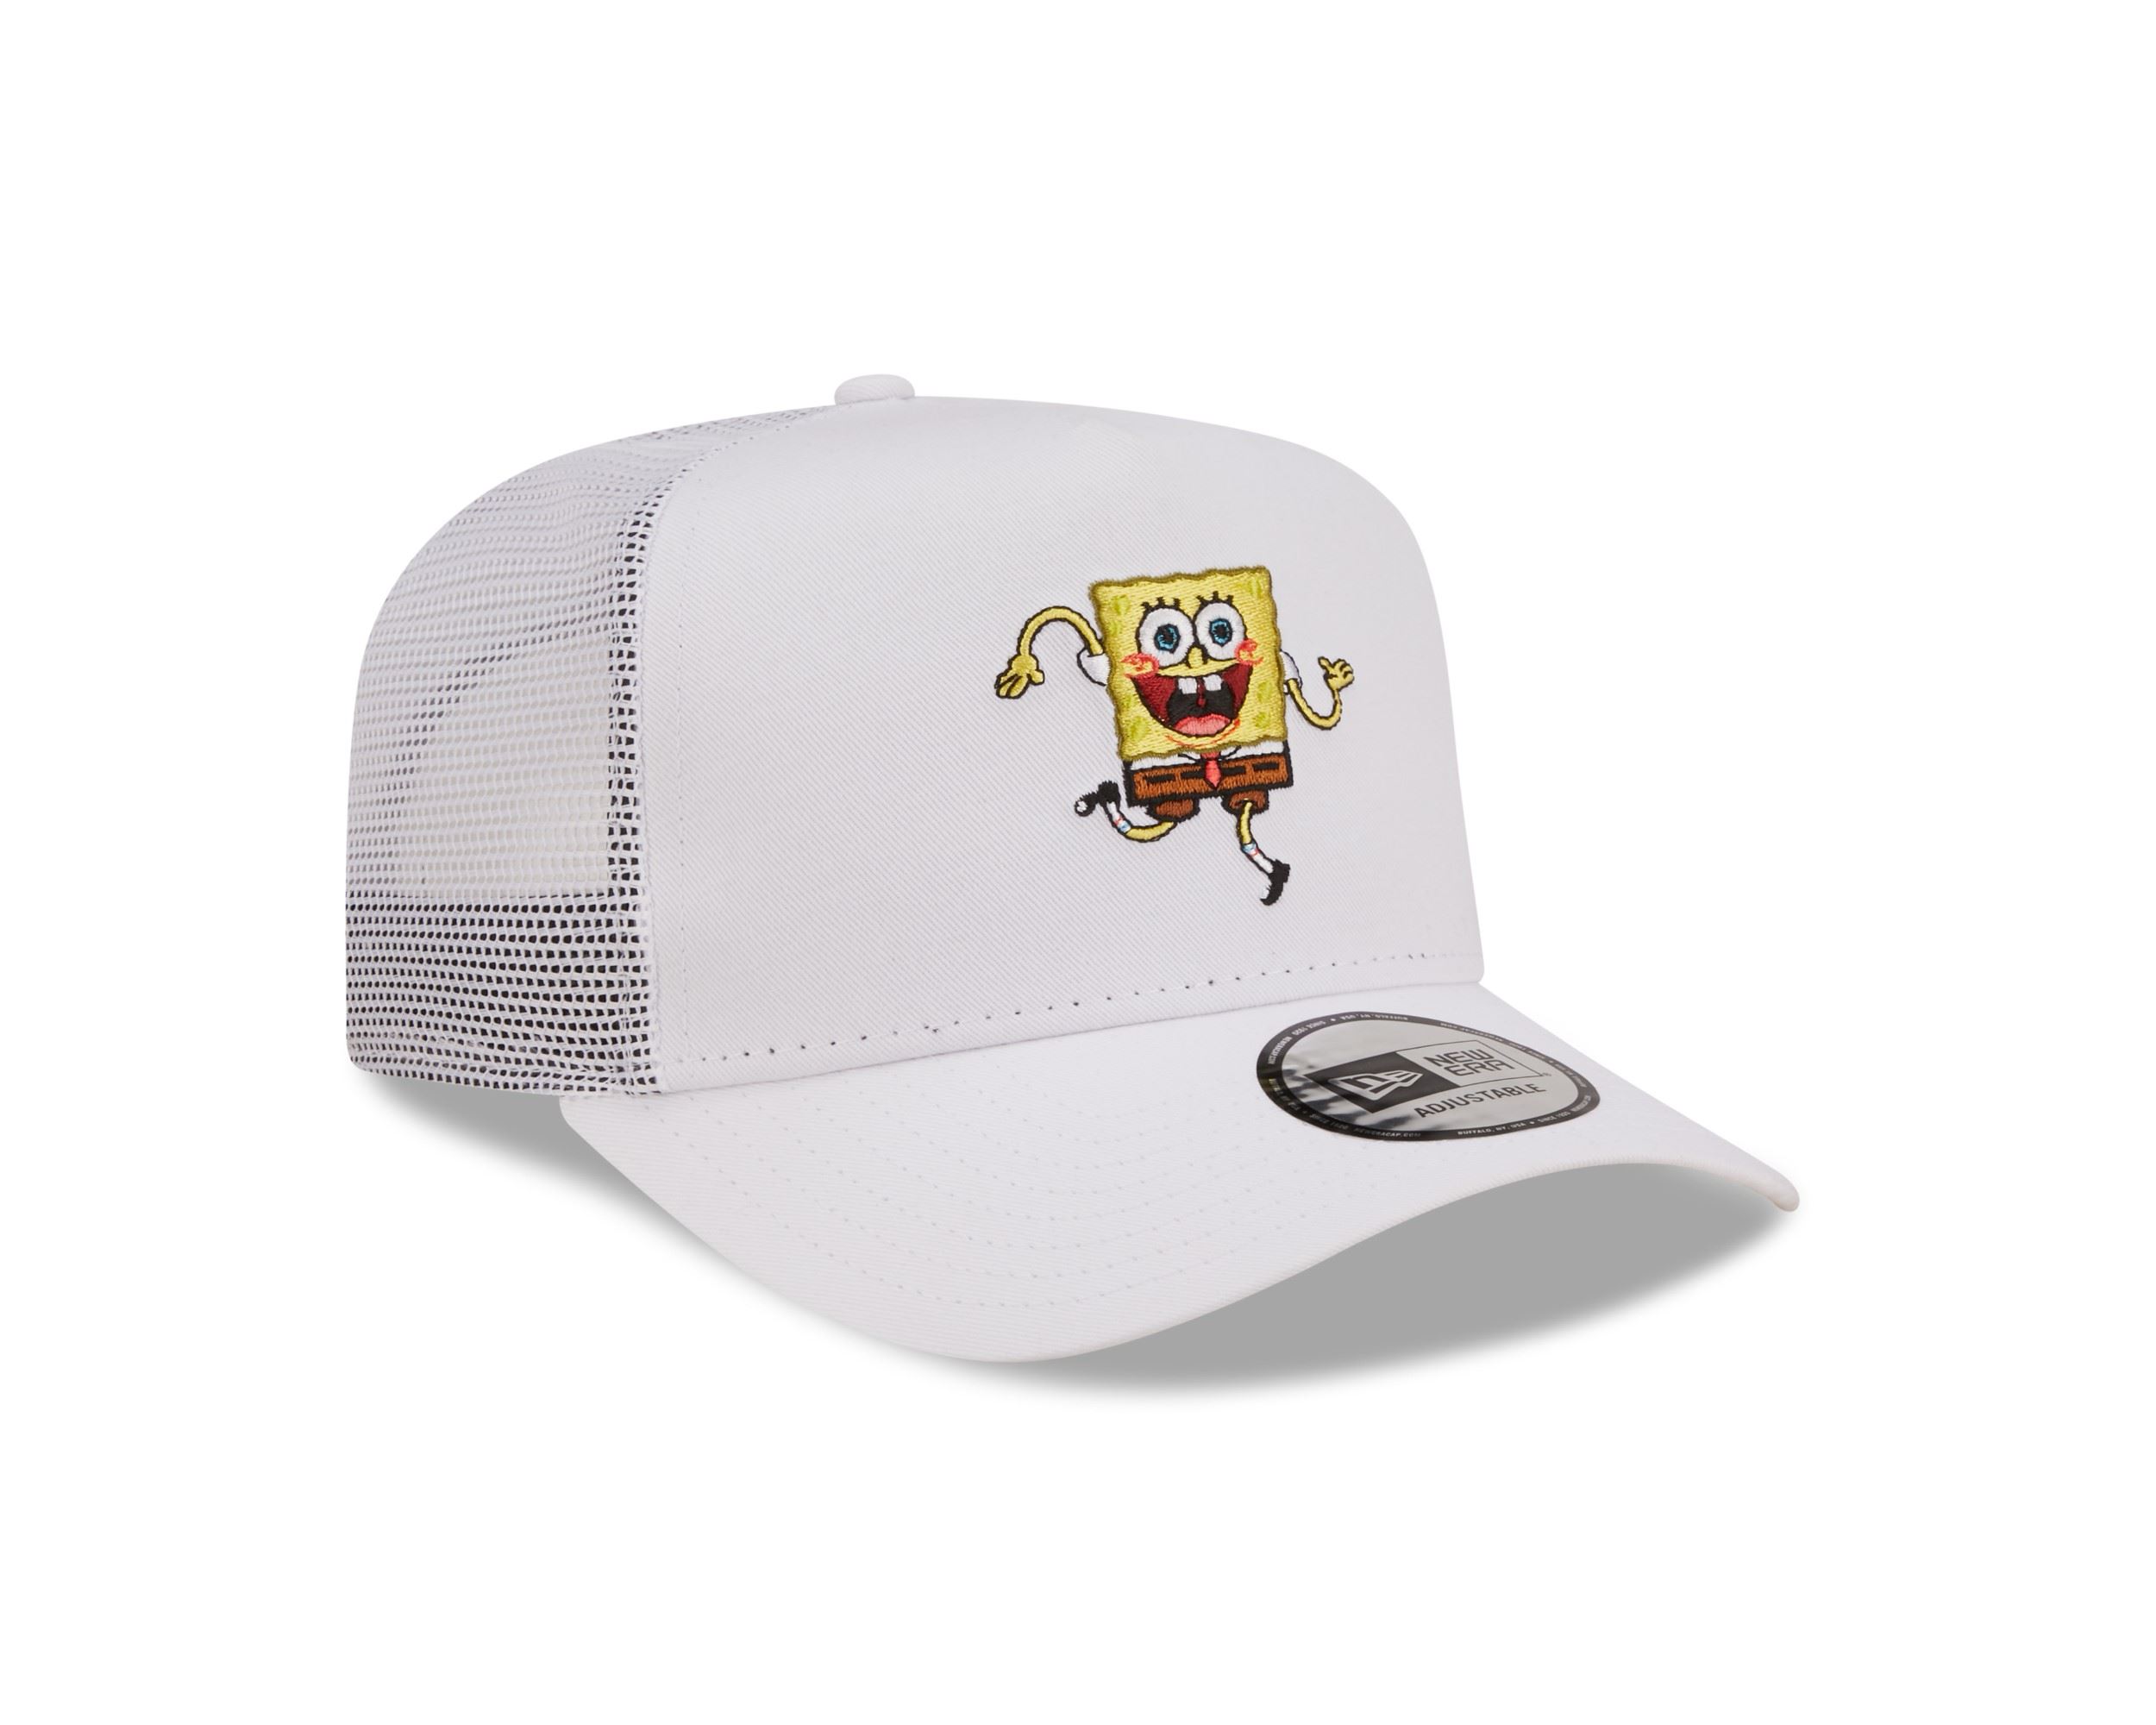 Spongebob Squarepants Nickelodeon Spongebob White A-Frame Adjustable Trucker Cap New Era